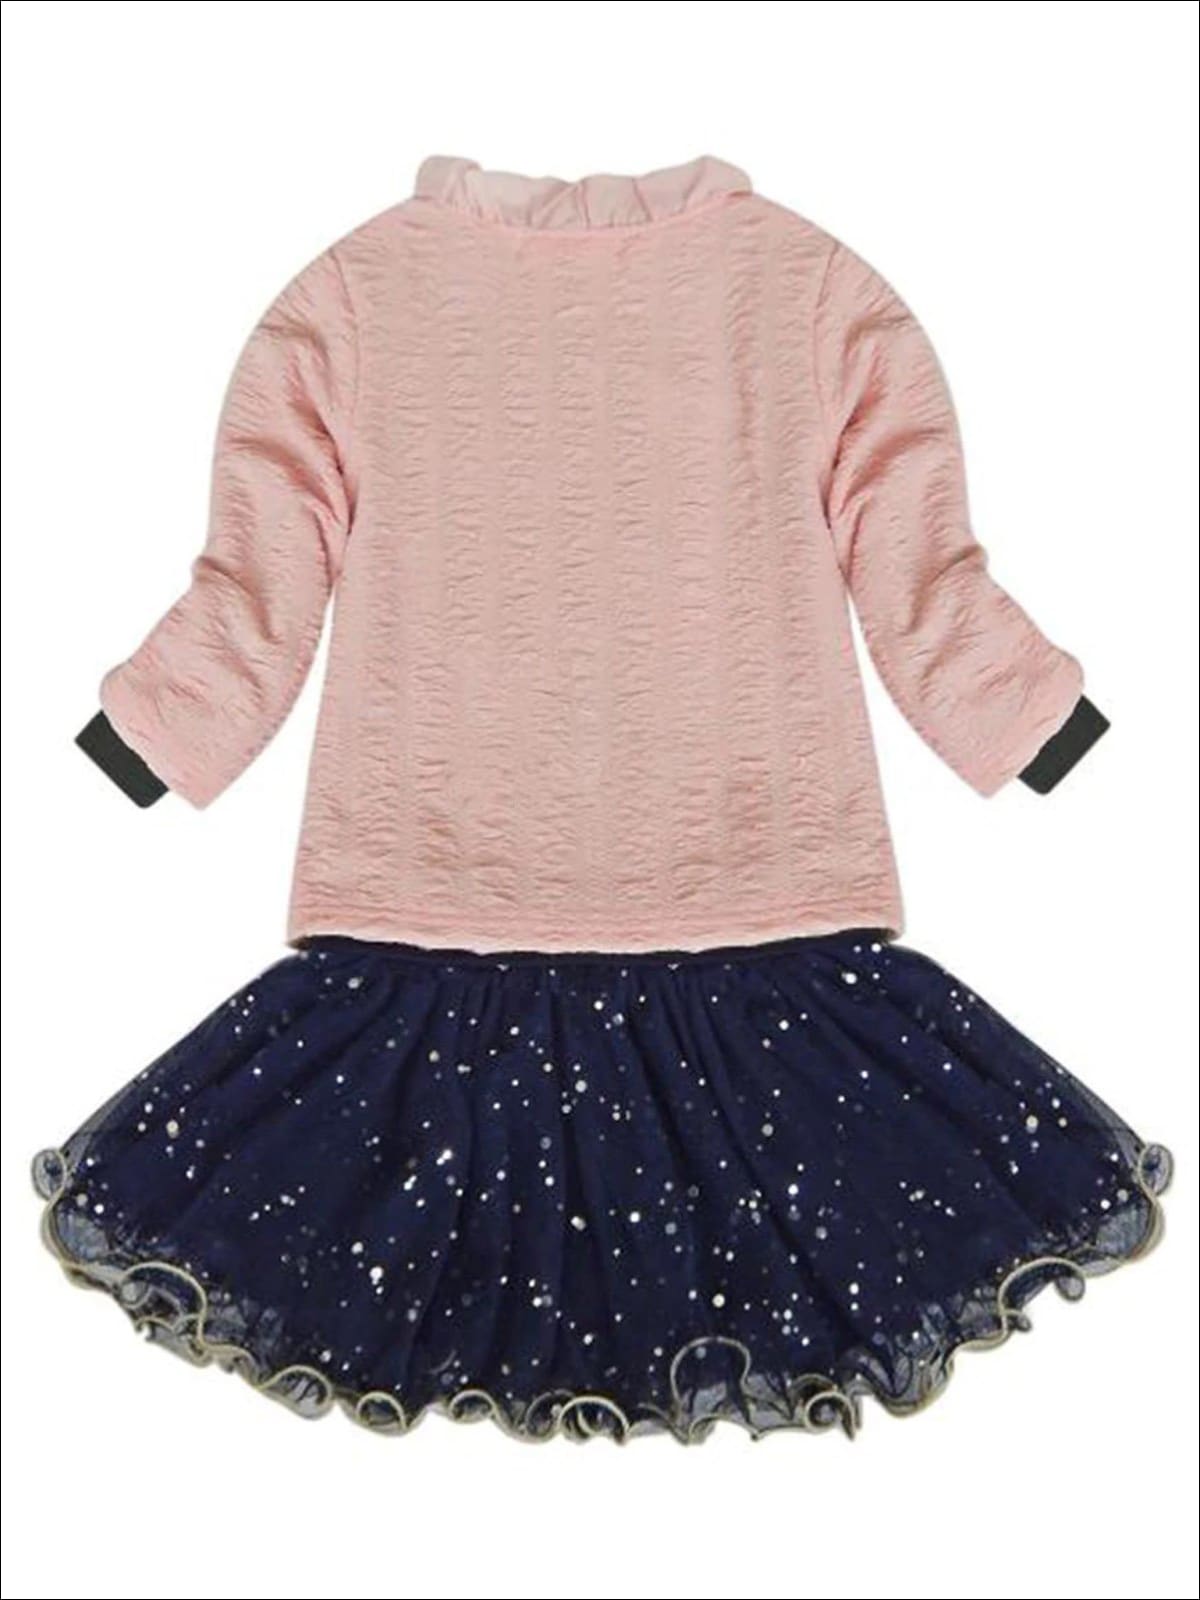 Girls Navy Long Sleeve Top With Sequin Tutu Bow Skirt & Pink Embellished Cardigan Set - Girls Fall Dressy Set